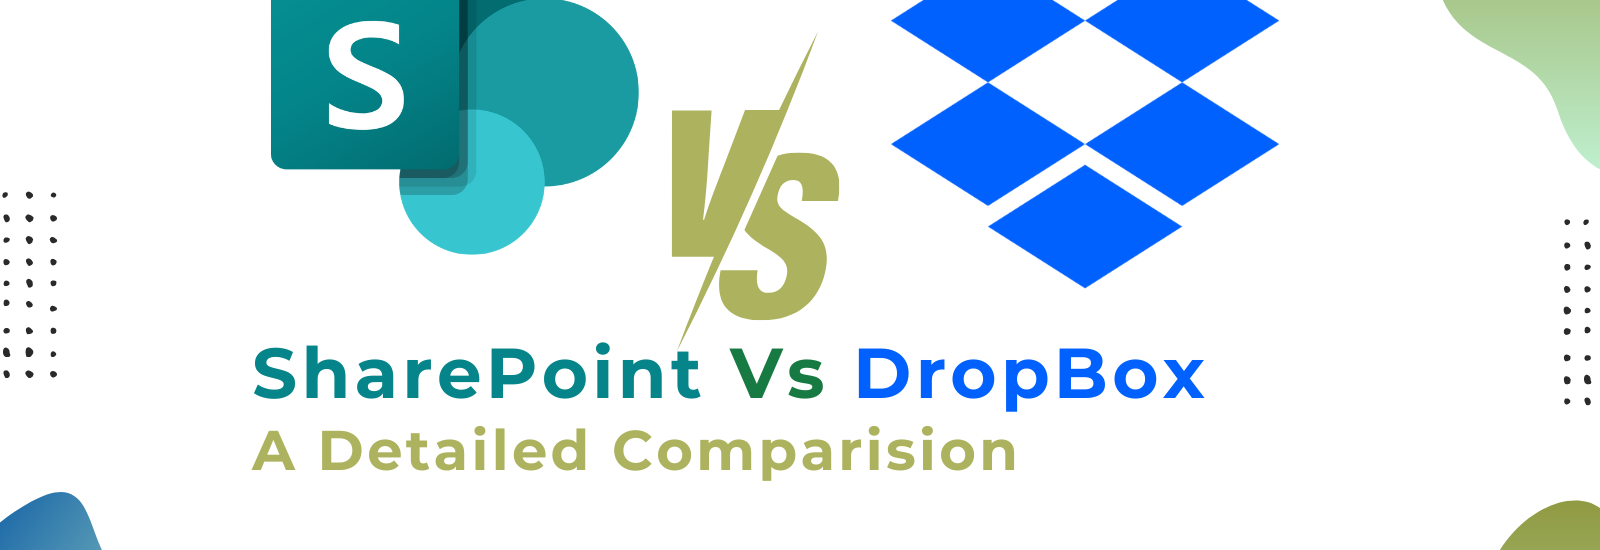 SharePoint Vs Dropbox